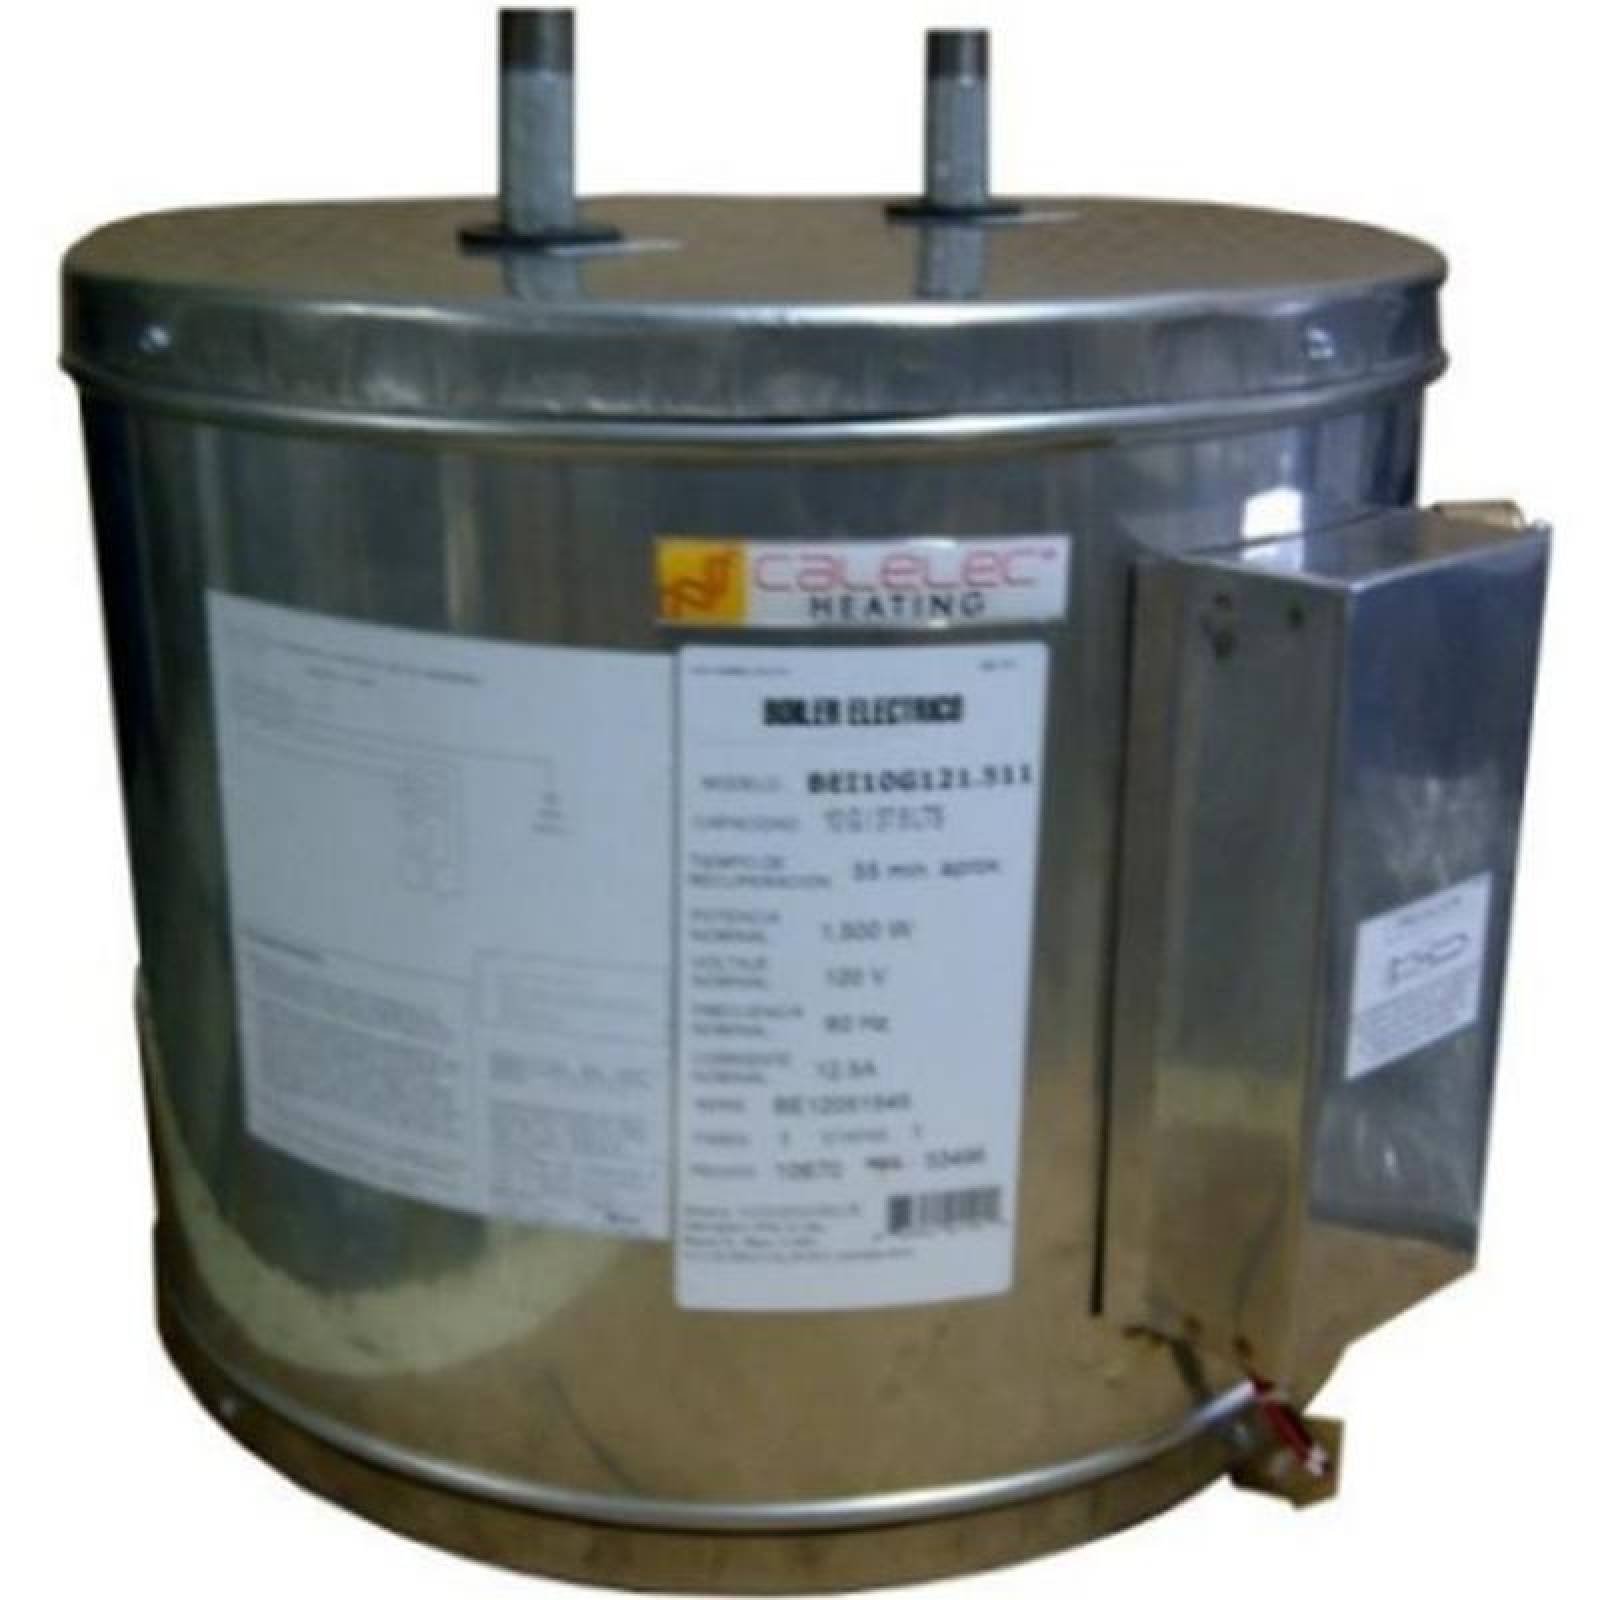 Boiler de Agua Industrial Oficinas MXHBO-022 262,5L 7 Serv, 240V1F60Hz 39,1A 5,5KW Inox, HomeBoil